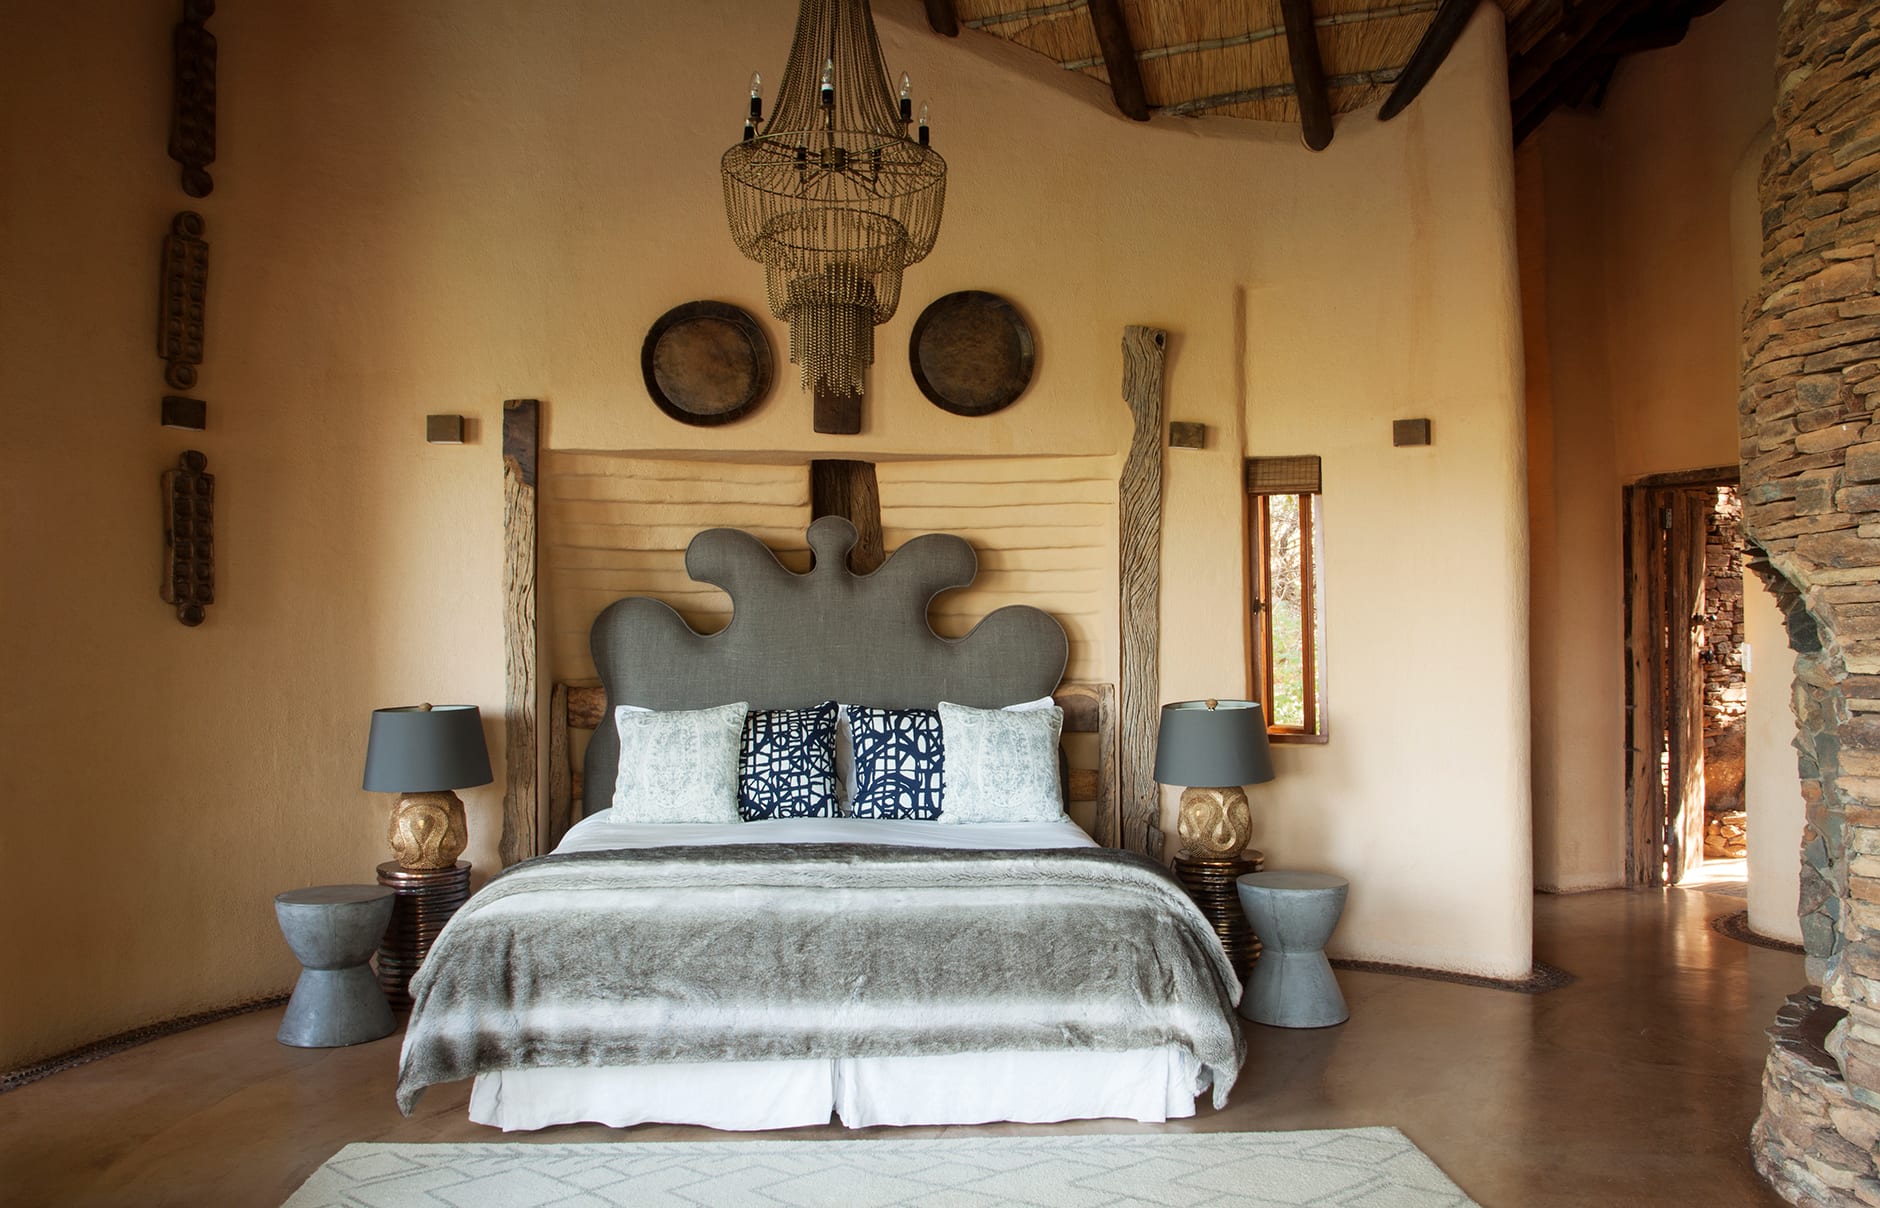 Molori Safari Lodge, South Africa.  Hotel Review by TravelPlusStyle. Photo  © Molori Safari Lodge